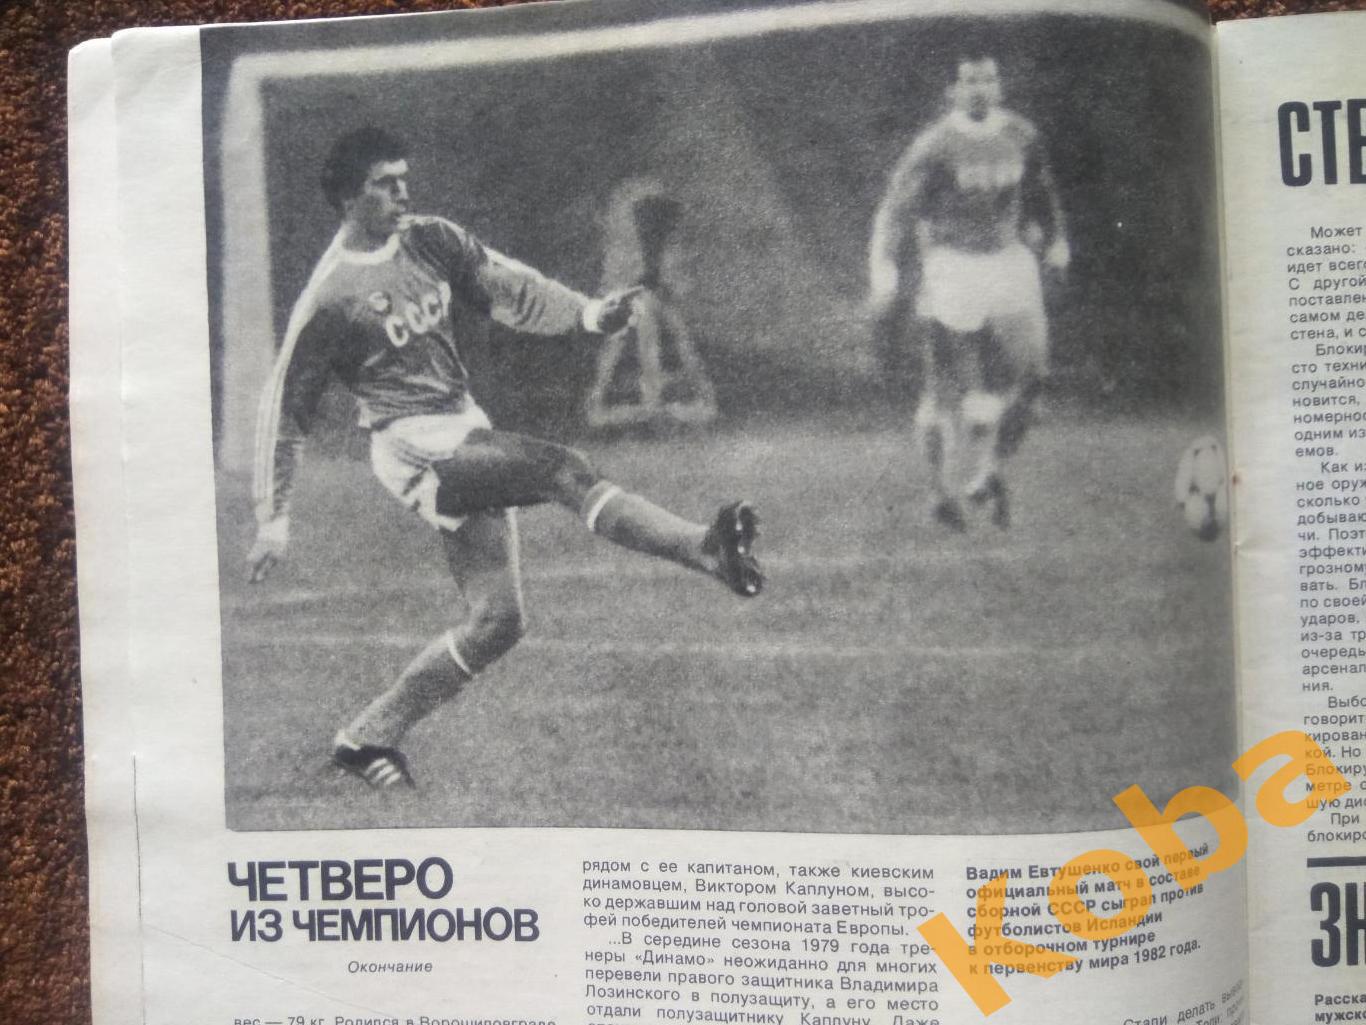 Гандбол Регби Баскетбол Хоккей Енисей Футбол Андреев ЧМ Испания 82 СИ 1981 №3 3